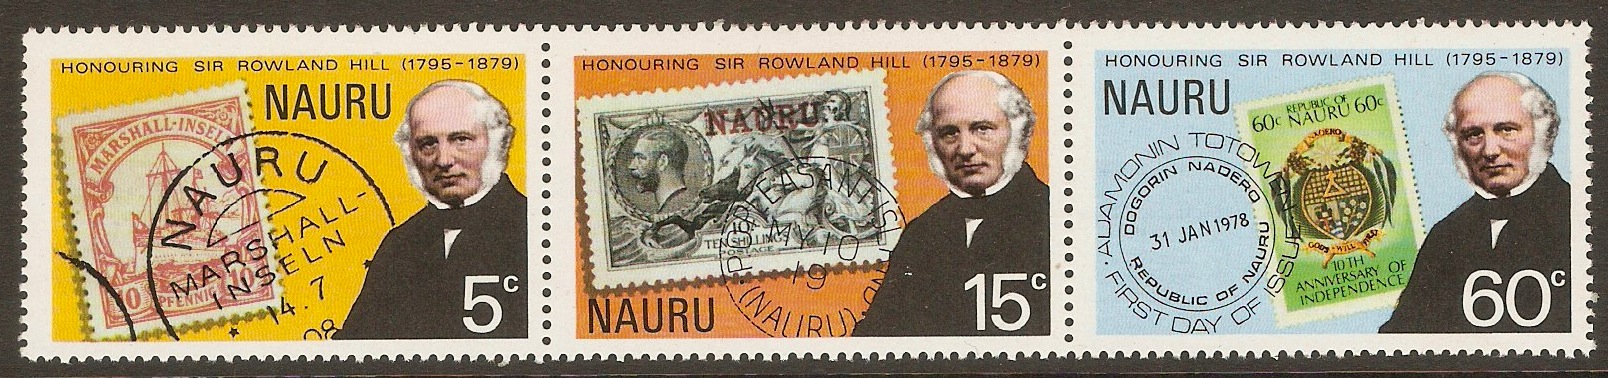 Nauru 1979 Rowland Hill Commemoration set. SG204-SG206.